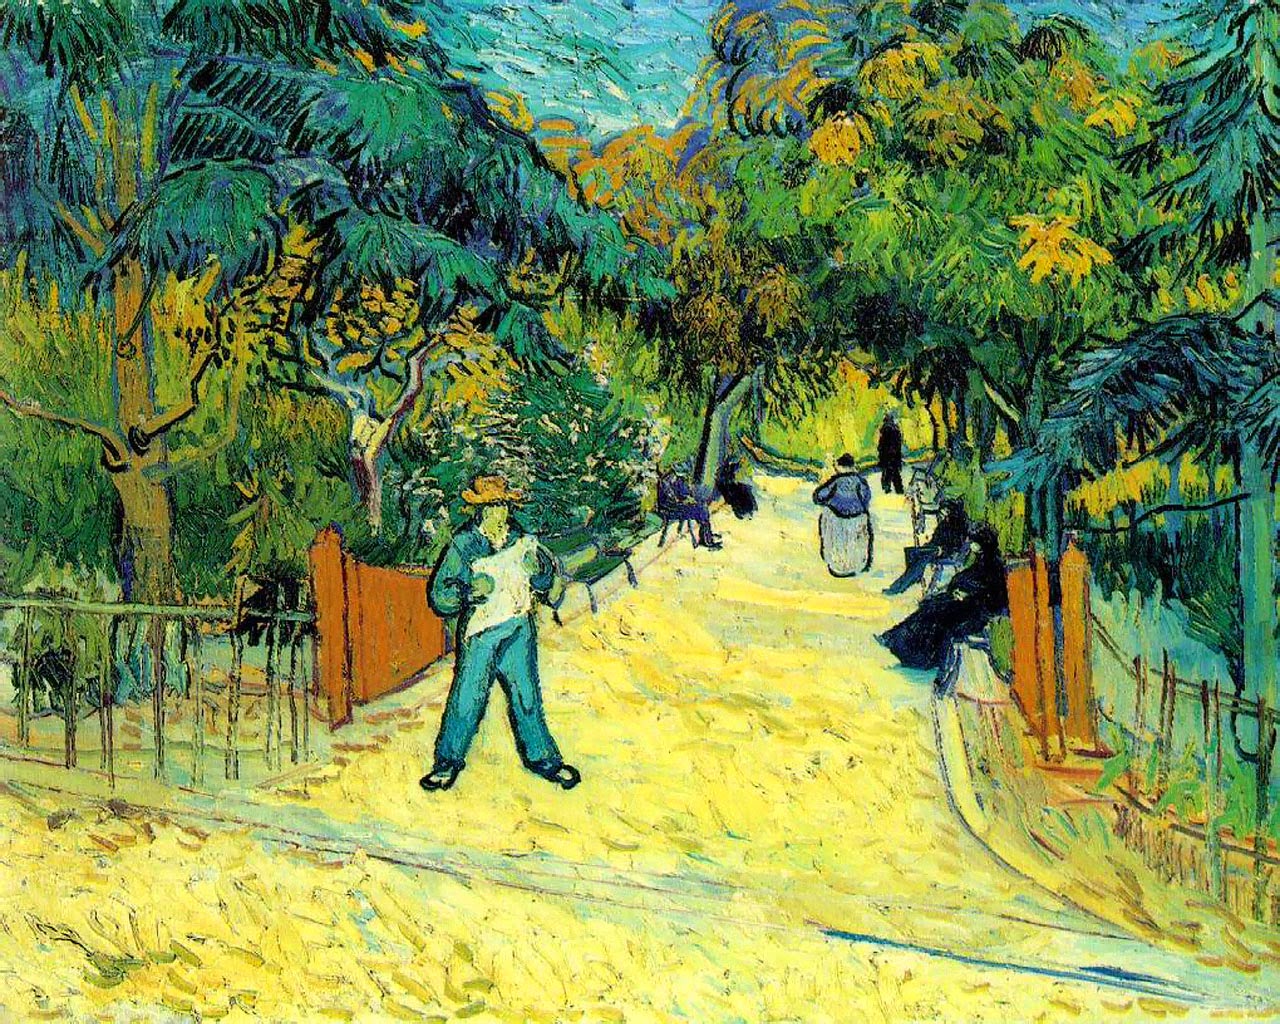 Vincent+Van+Gogh-1853-1890 (874).jpg